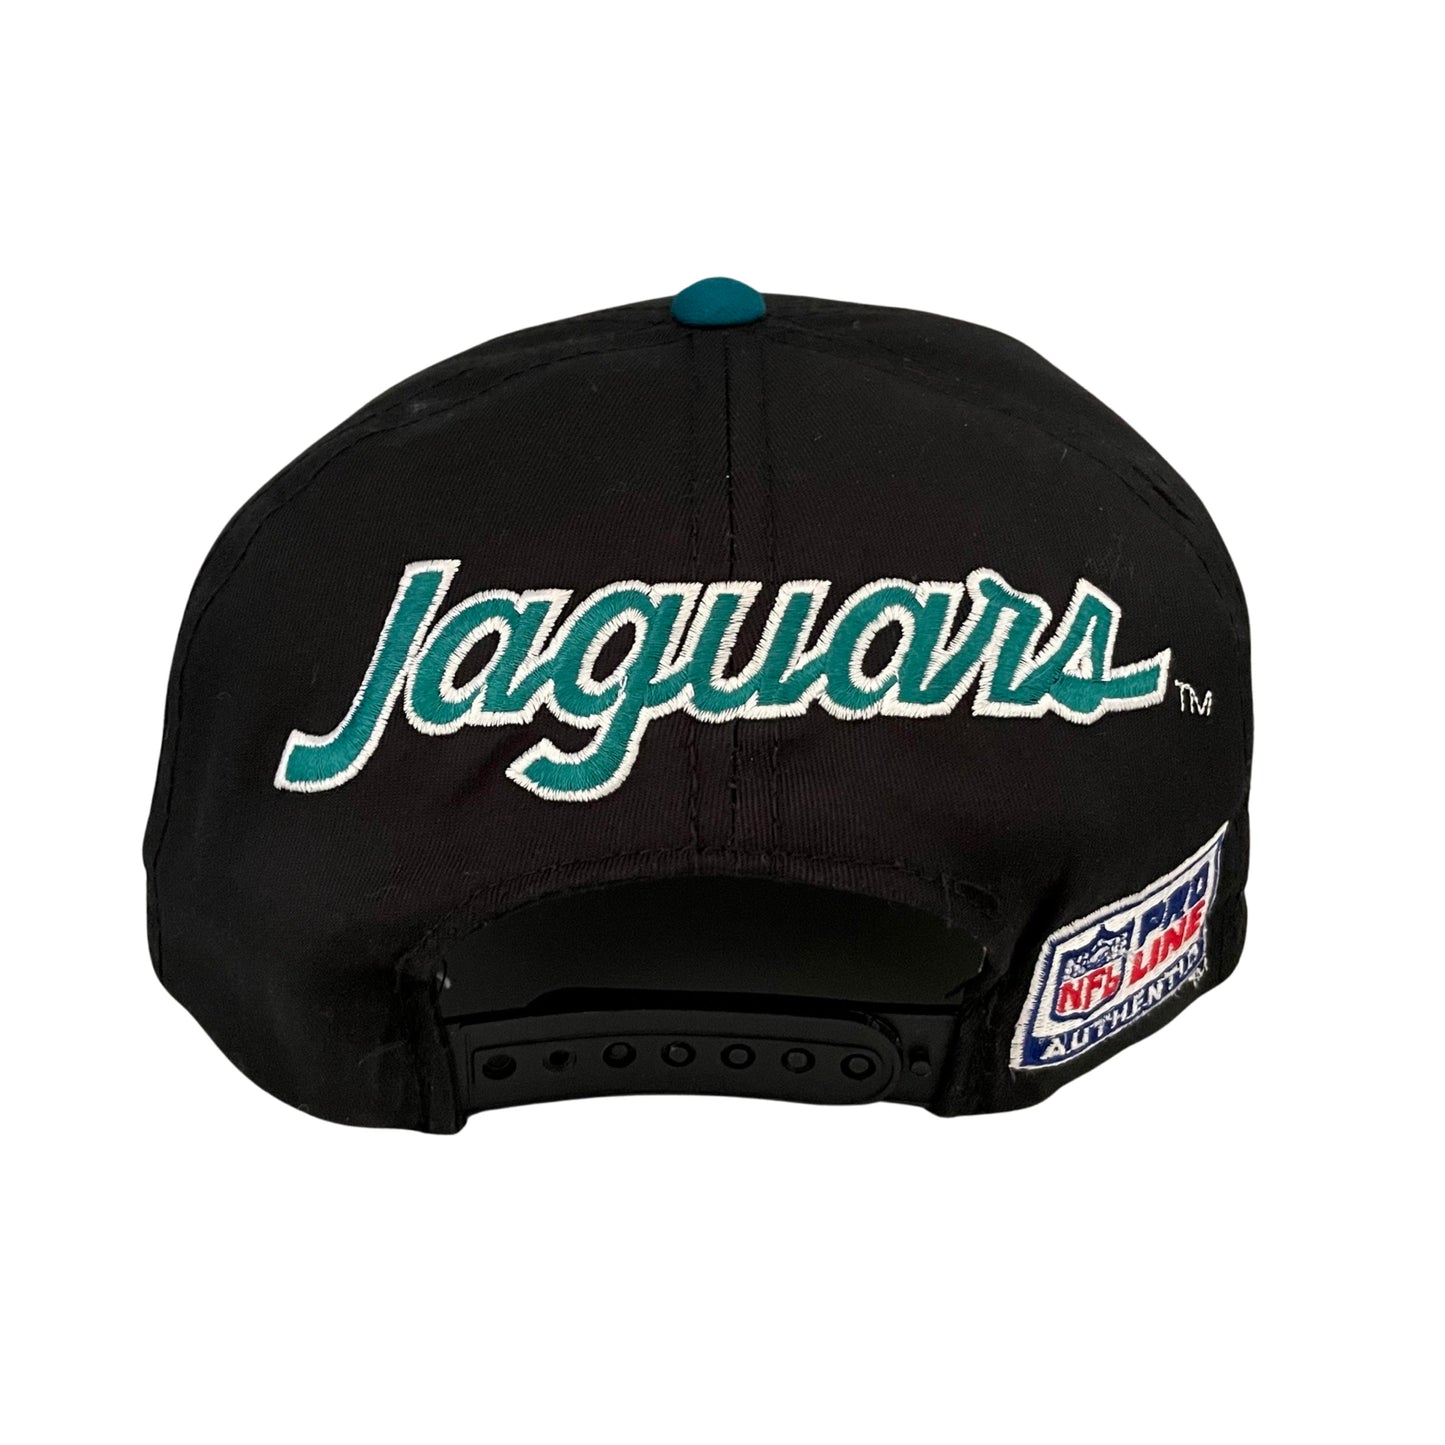 Vintage Jacksonville Jaguars SPORTS SPECIALTIES "Backscript" banned logo hat